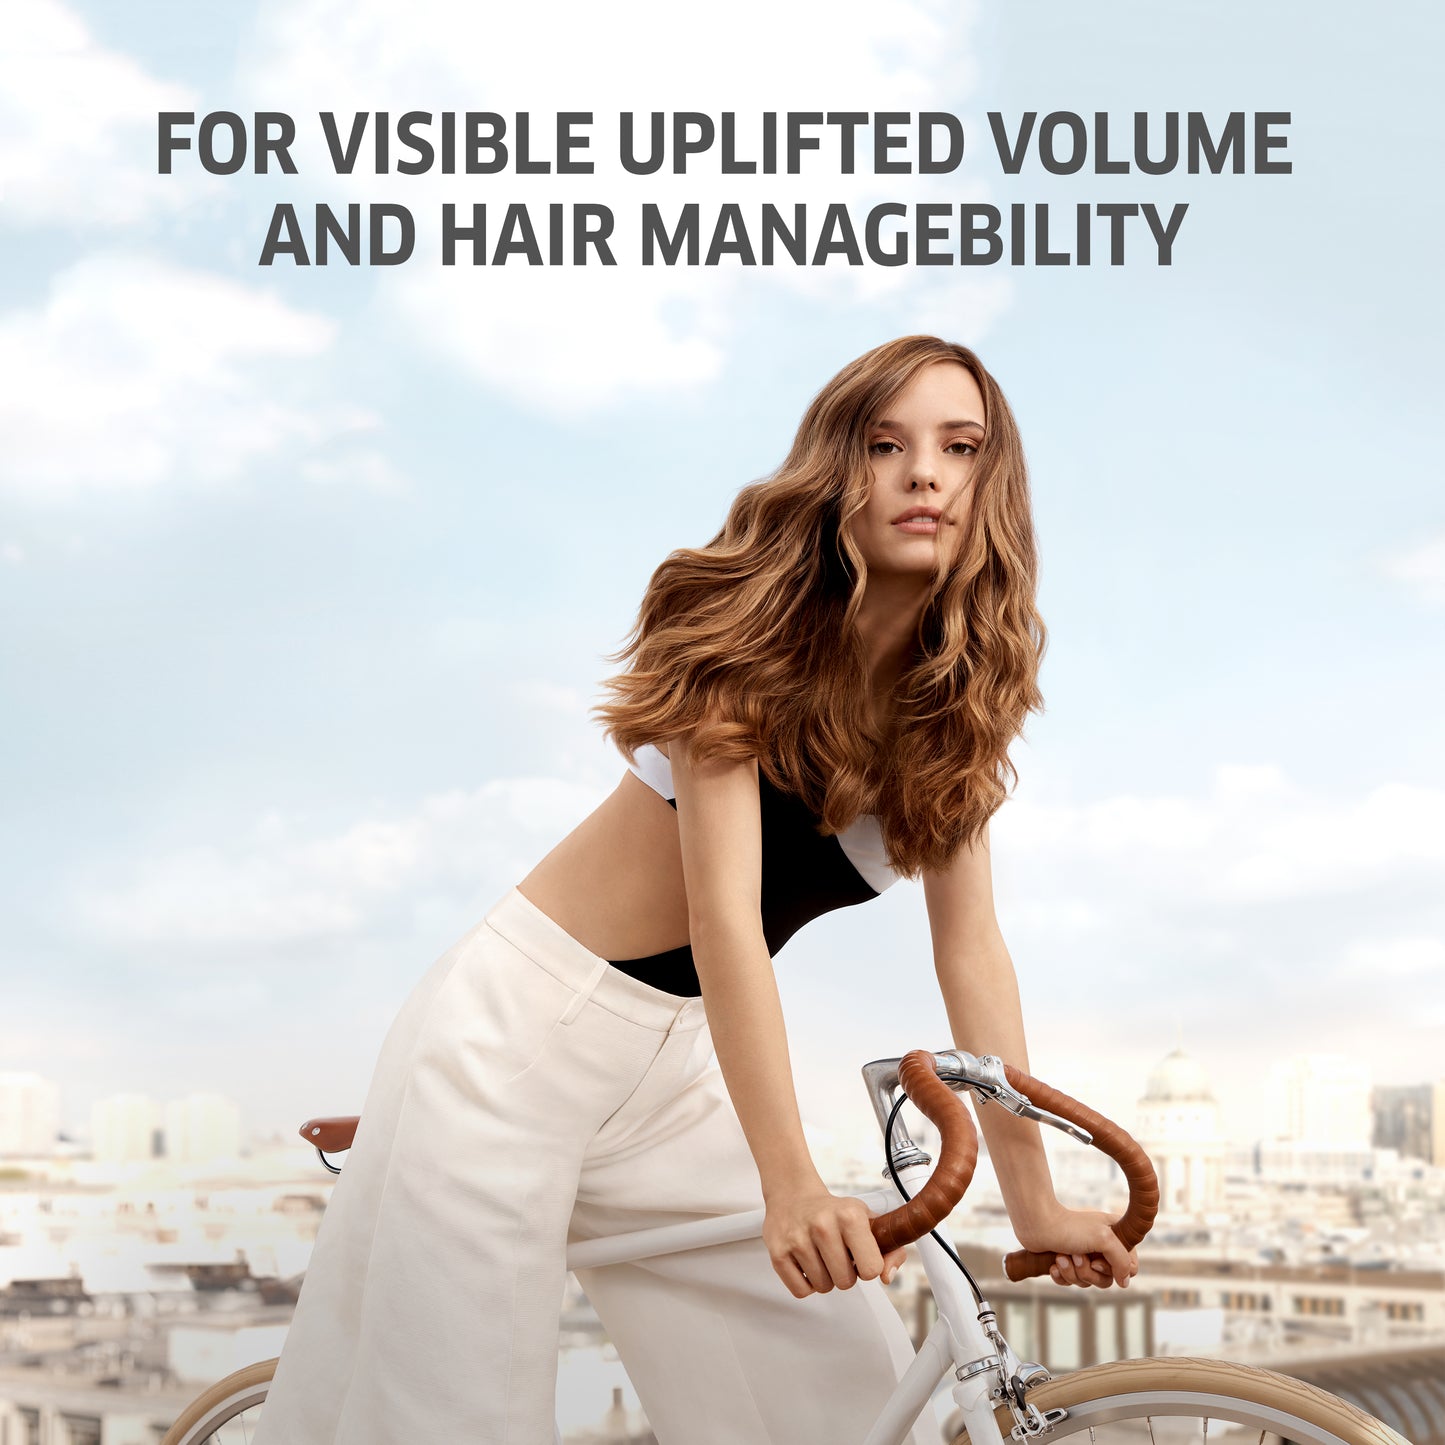 Wella - Invigo - Scalp Balance - Volume Boost Shampoo